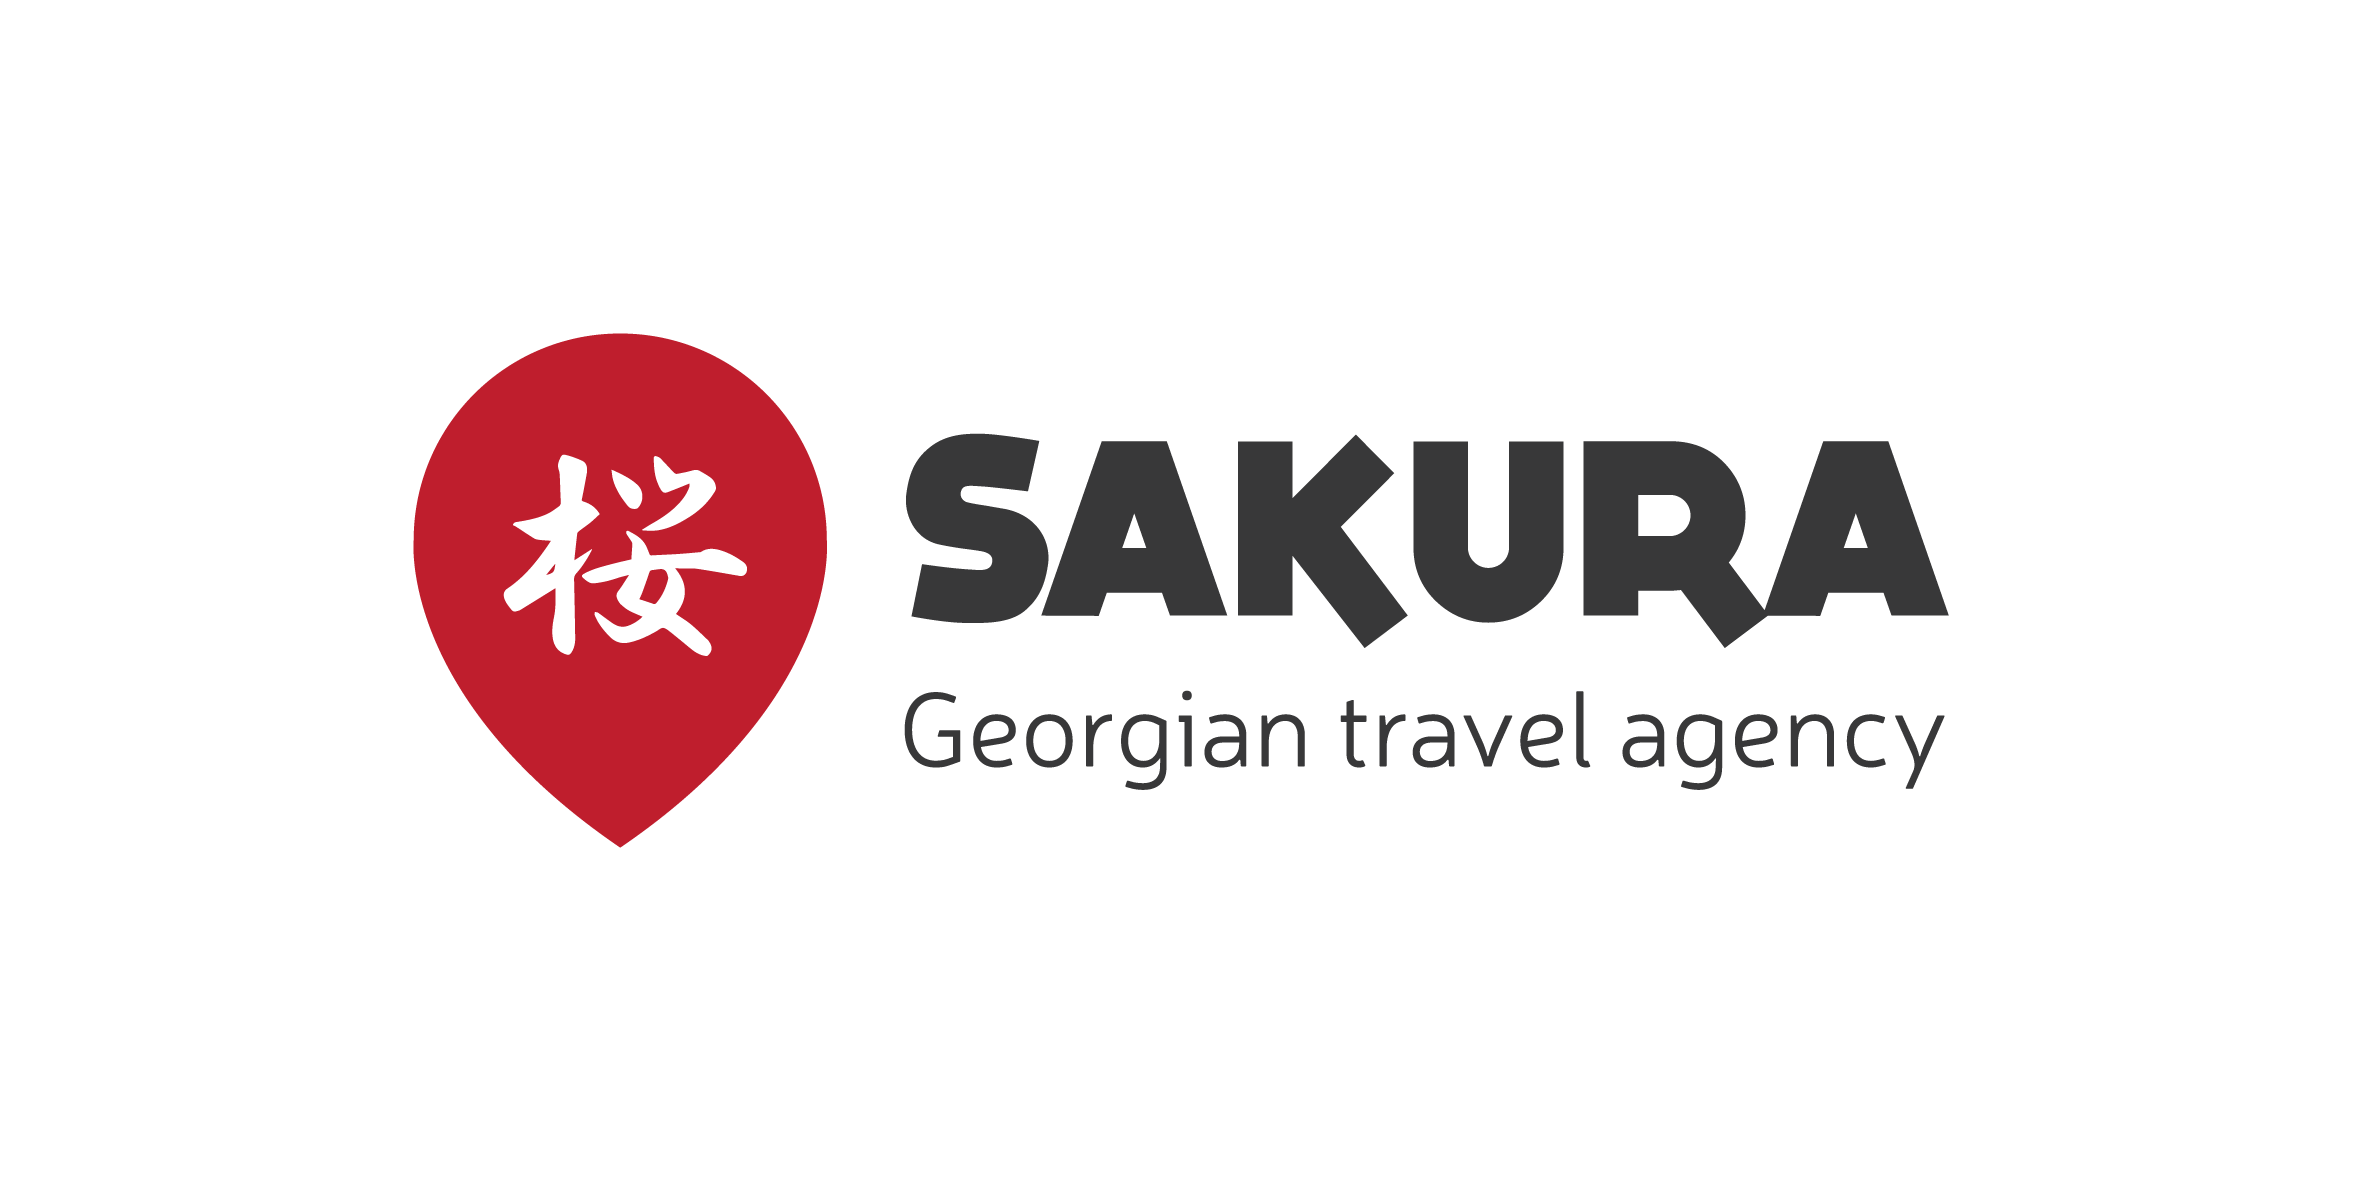 Sakura LLC (Sakura Travel Agency) logo